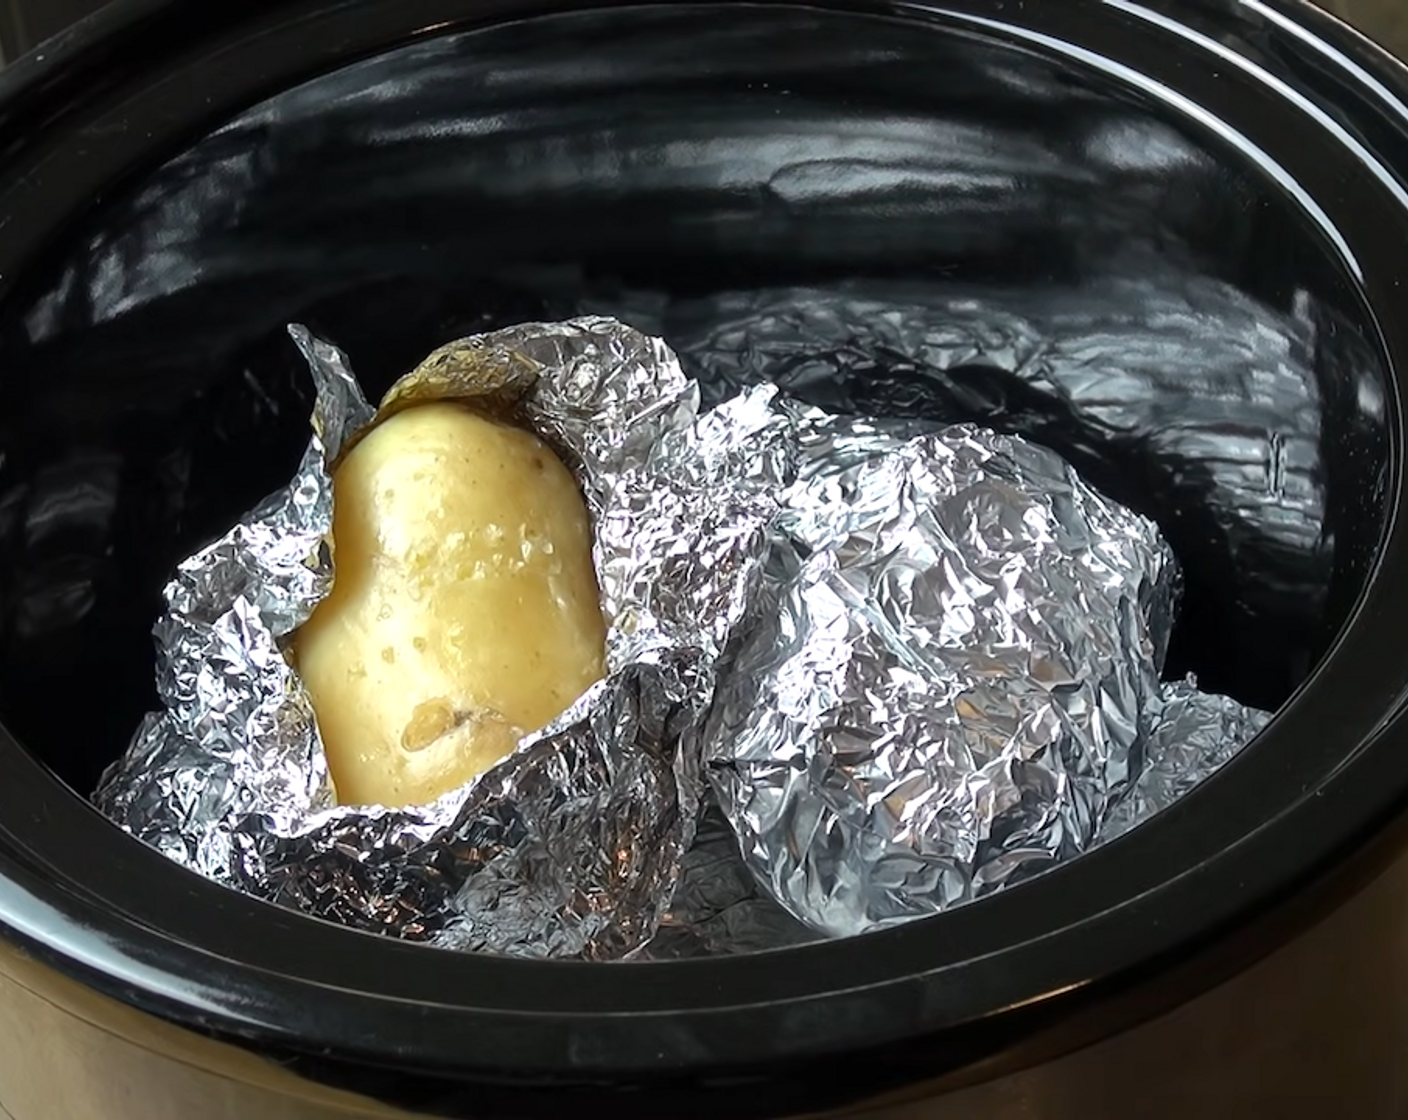 Slow Cooker Baked Potatoes